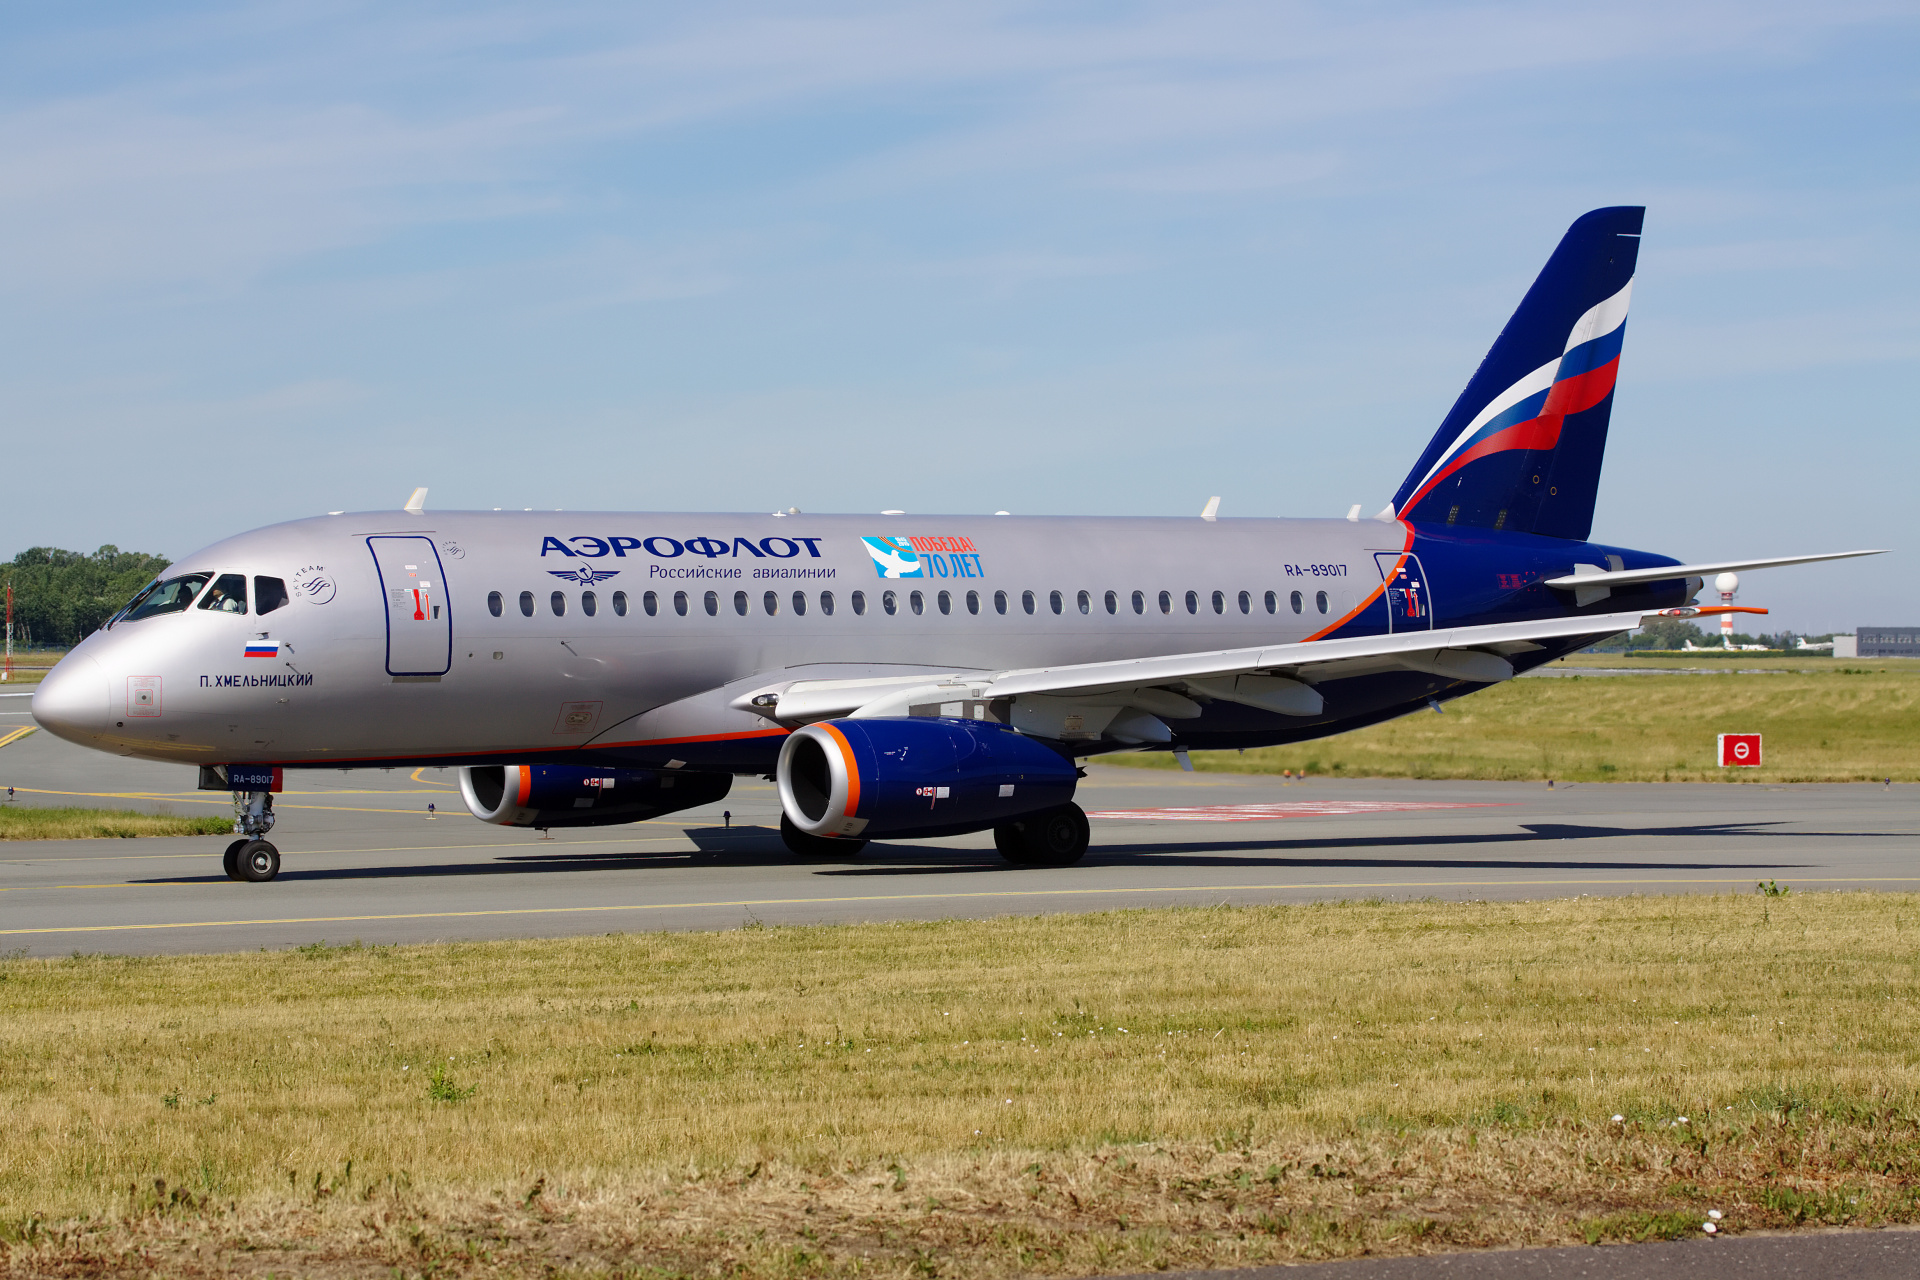 RA-89017 (70 Years - Victory sticker) (Aircraft » EPWA Spotting » Sukhoi Superjet 100-95B » Aeroflot Russian Airlines)